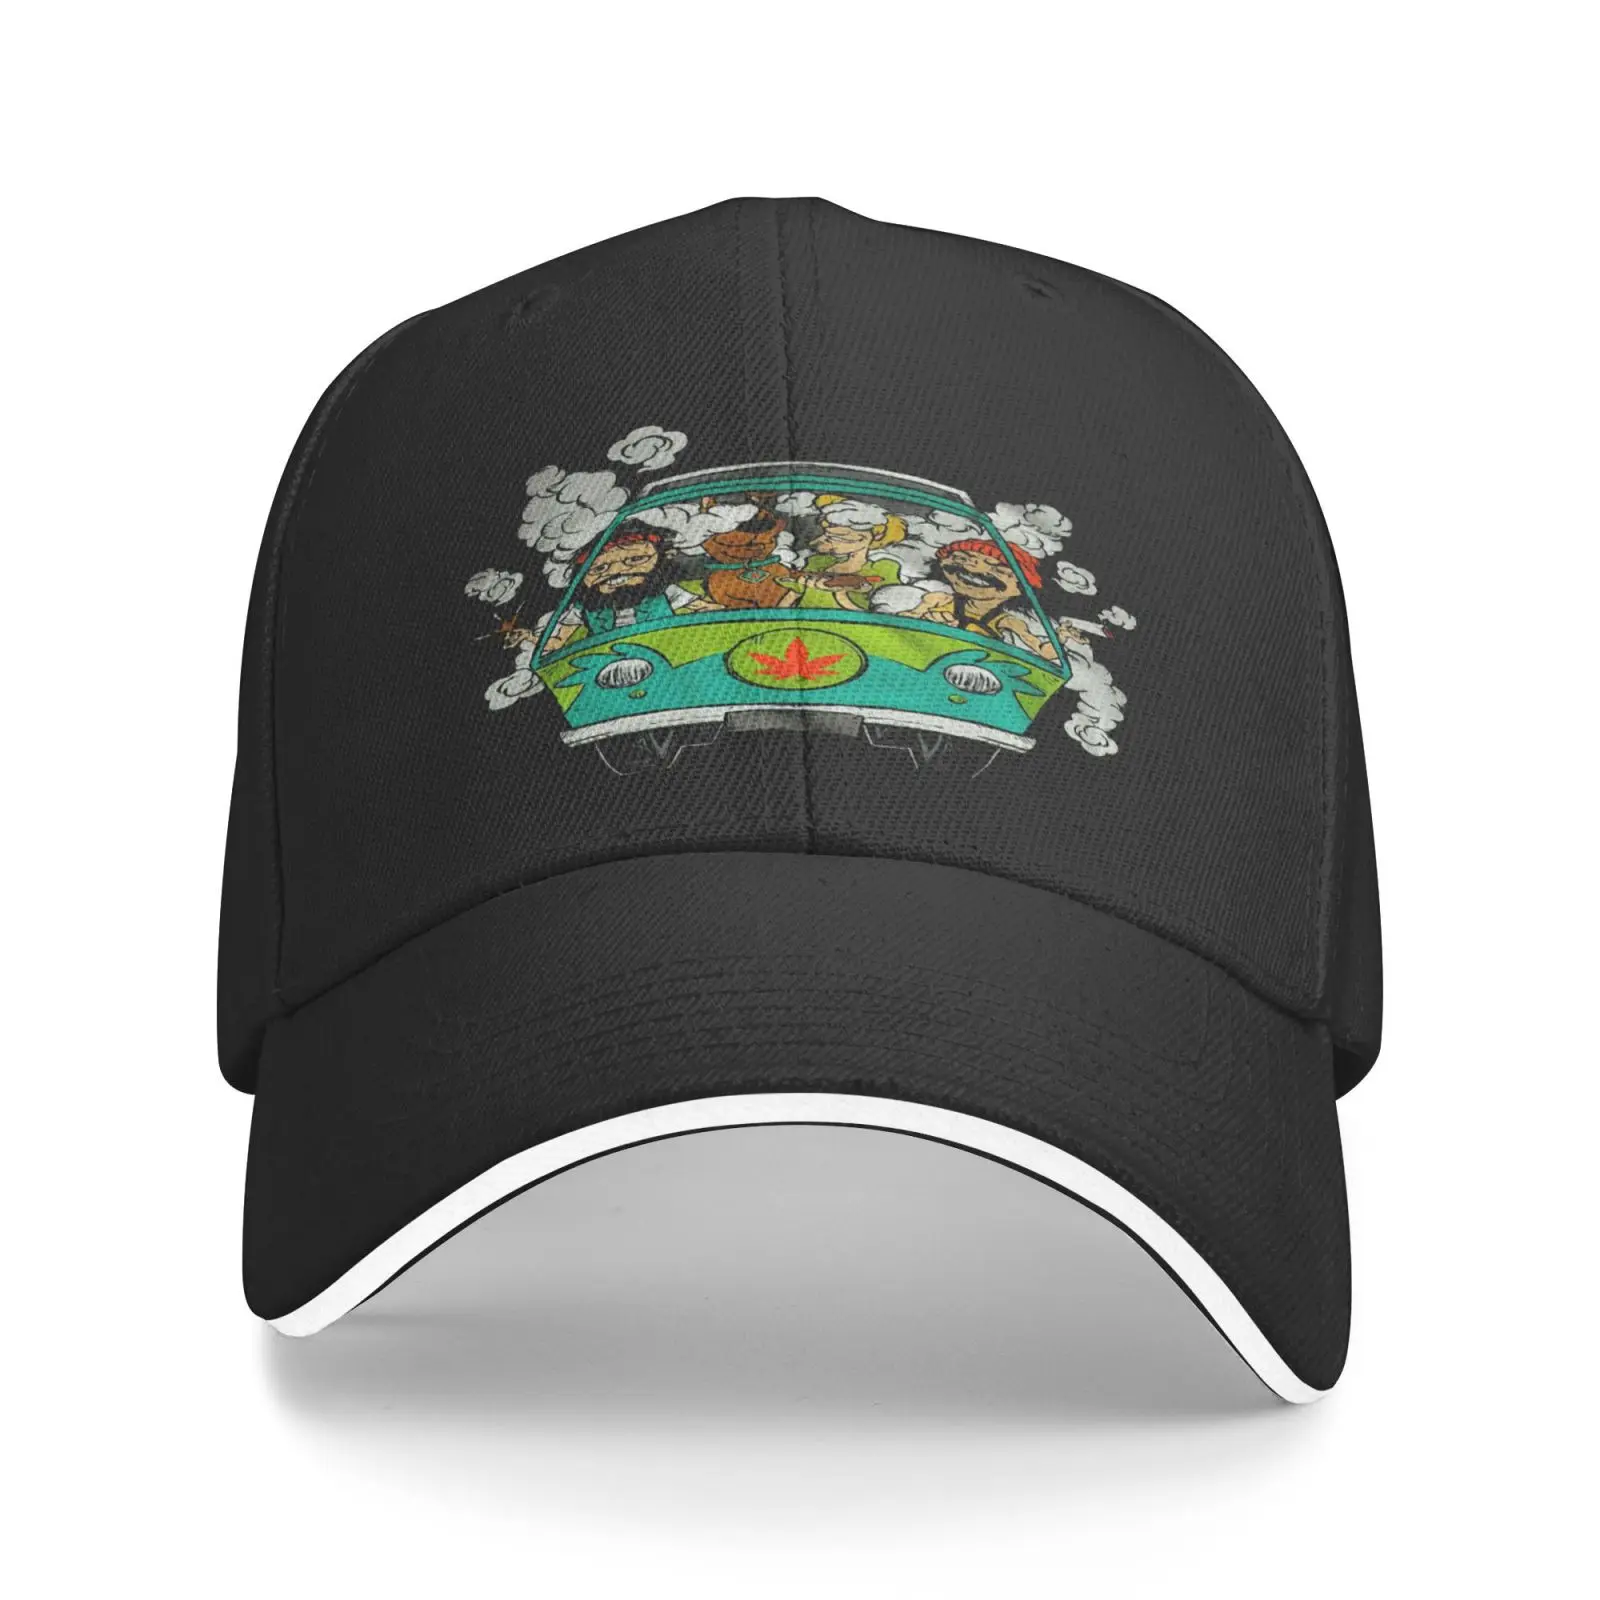 

Cheech And Chong с Scooby Smoke 836, мужские шапки, Мужская кепка, Балаклава, Кепка для гольфа, бейсболка для мужчин, кепка s, кепка для мужчин